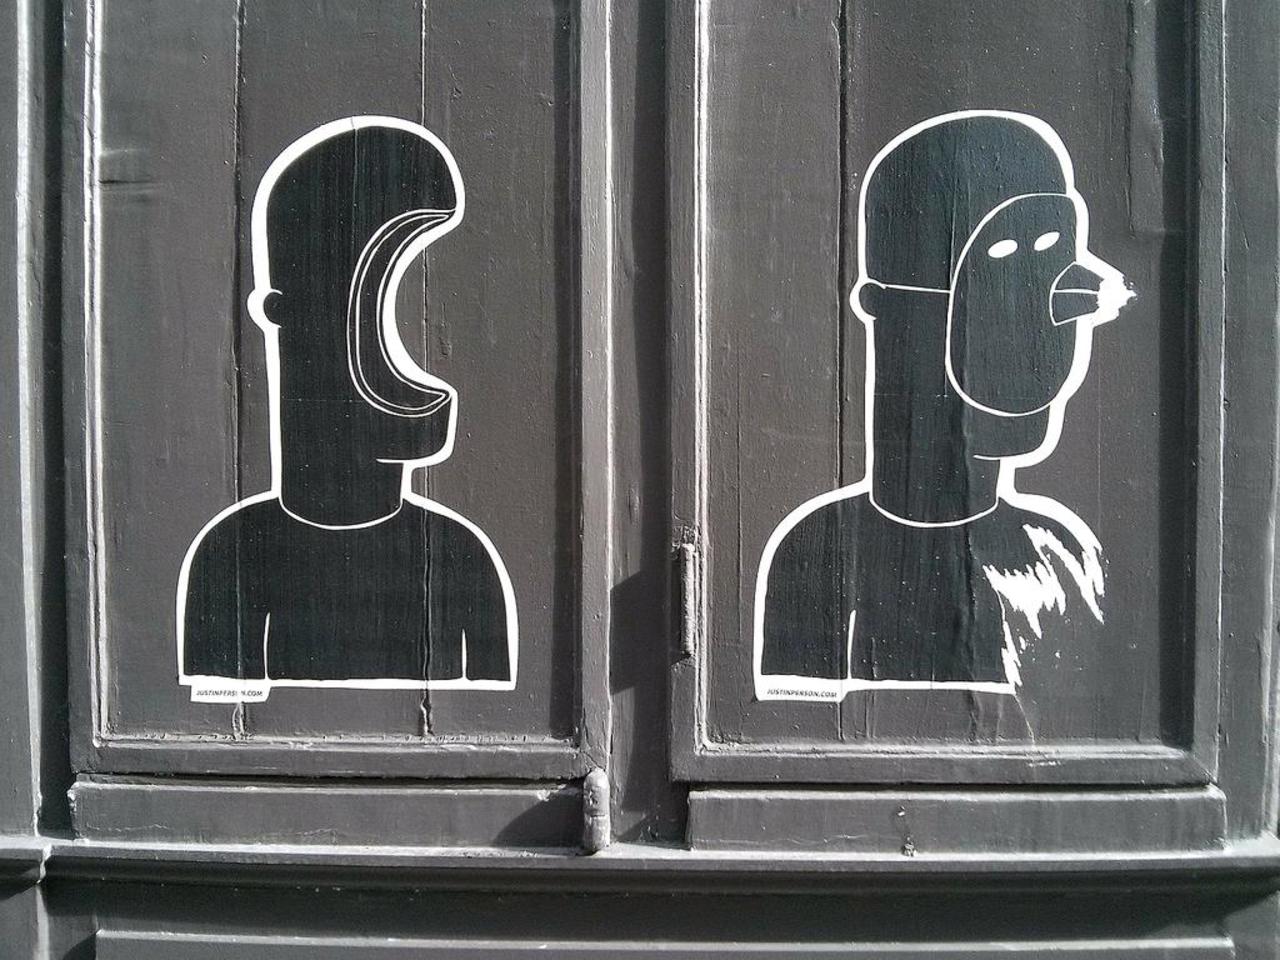 Street Art by Justin Person in #Paris http://www.urbacolors.com #art #mural #graffiti #streetart http://t.co/8AENzLjeTg